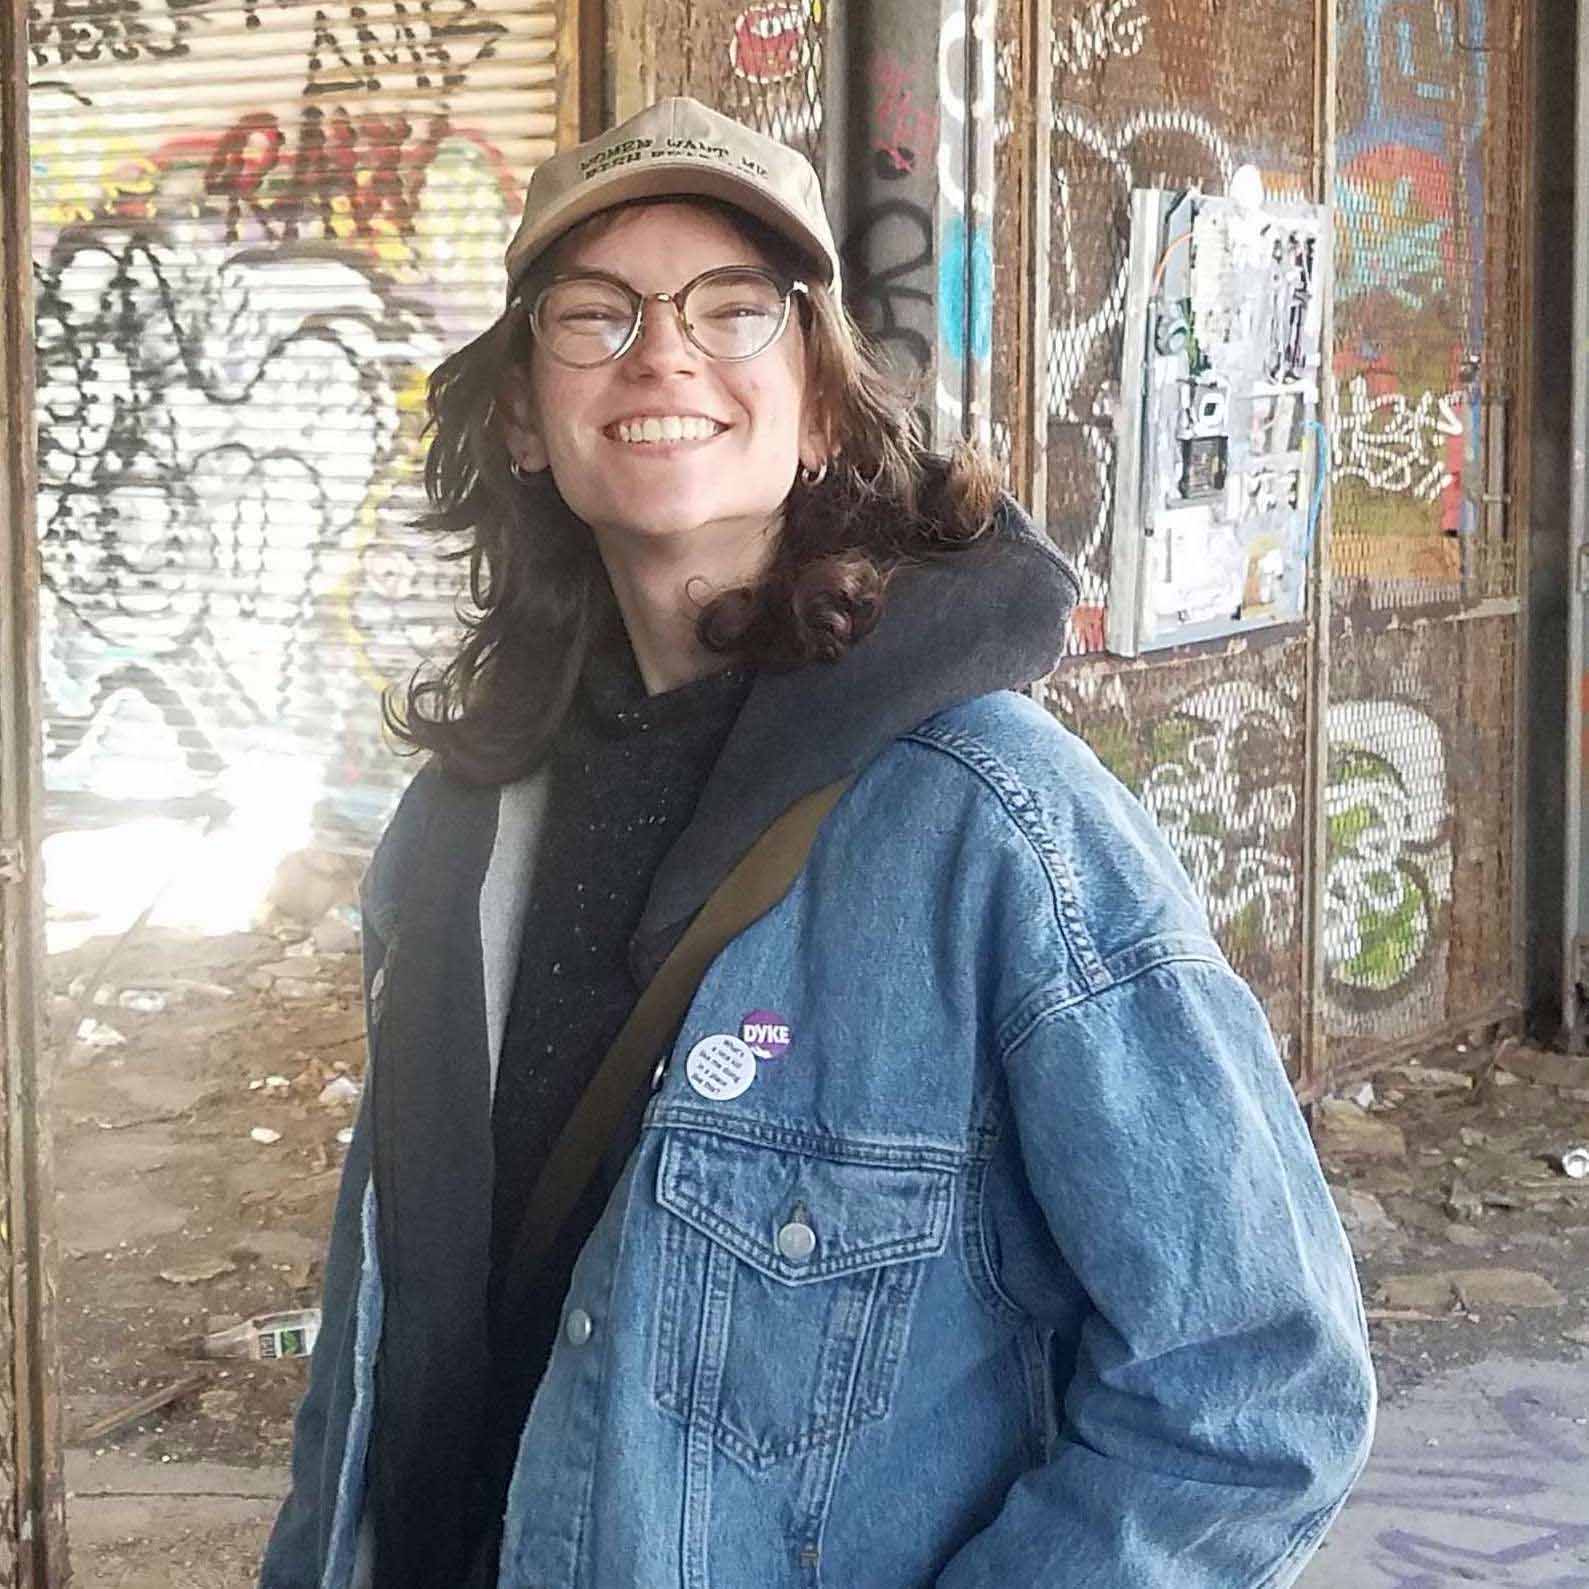 Tori smiles in a jean jacket before a graffiti wall